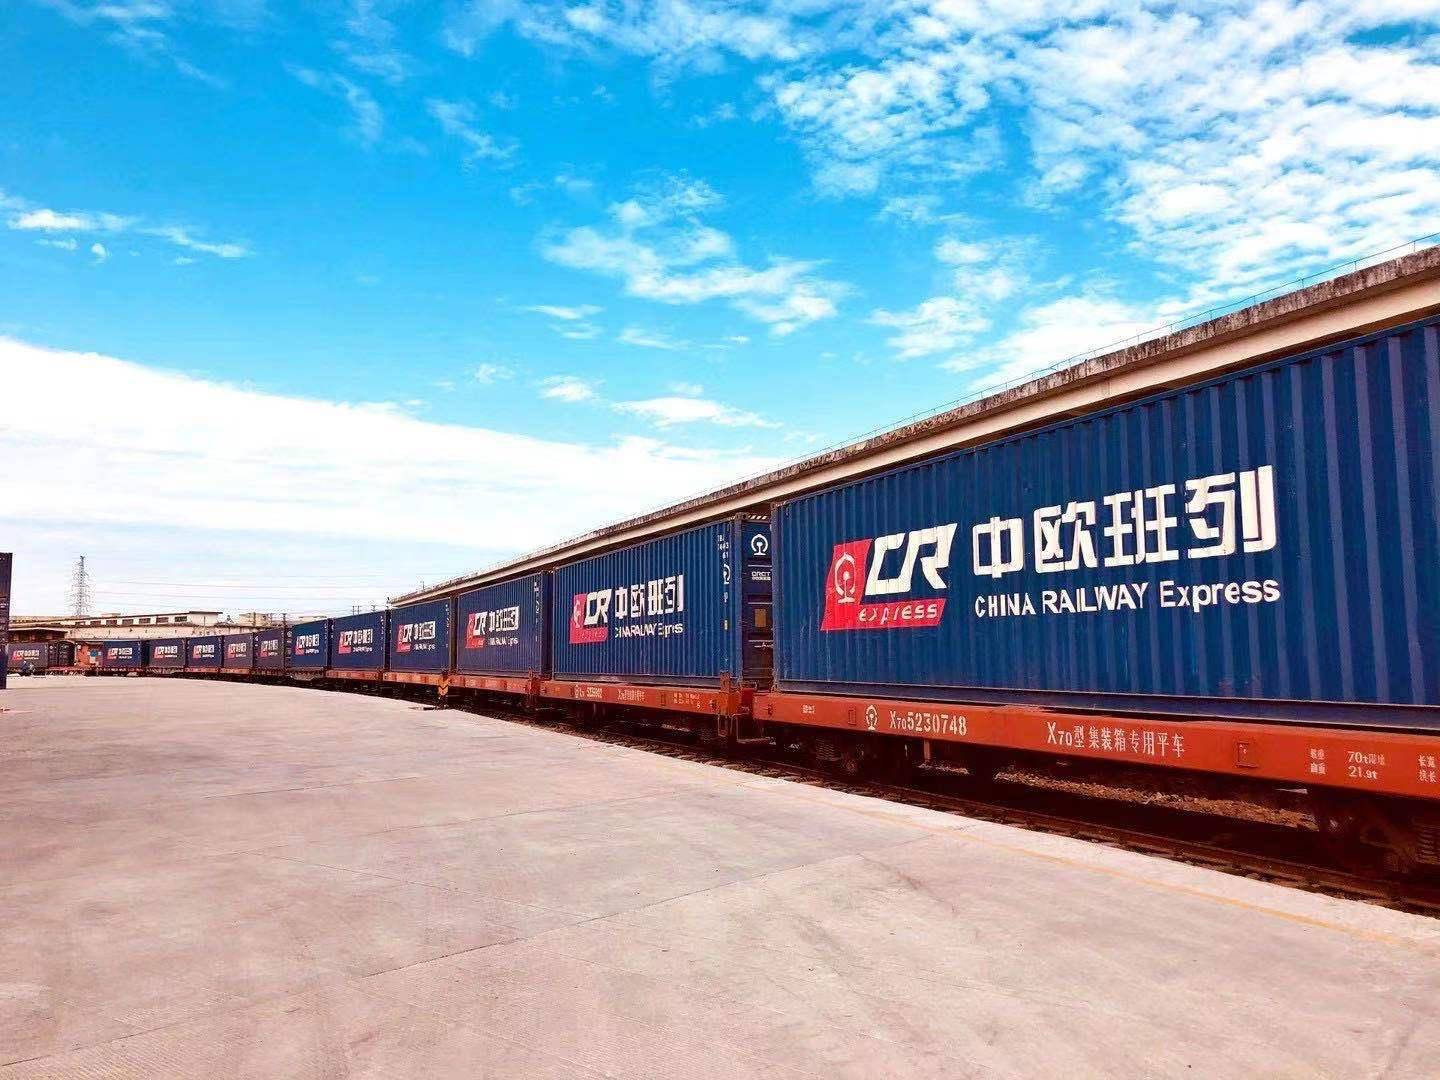 Services ferroviaires de fret Chine-Europe